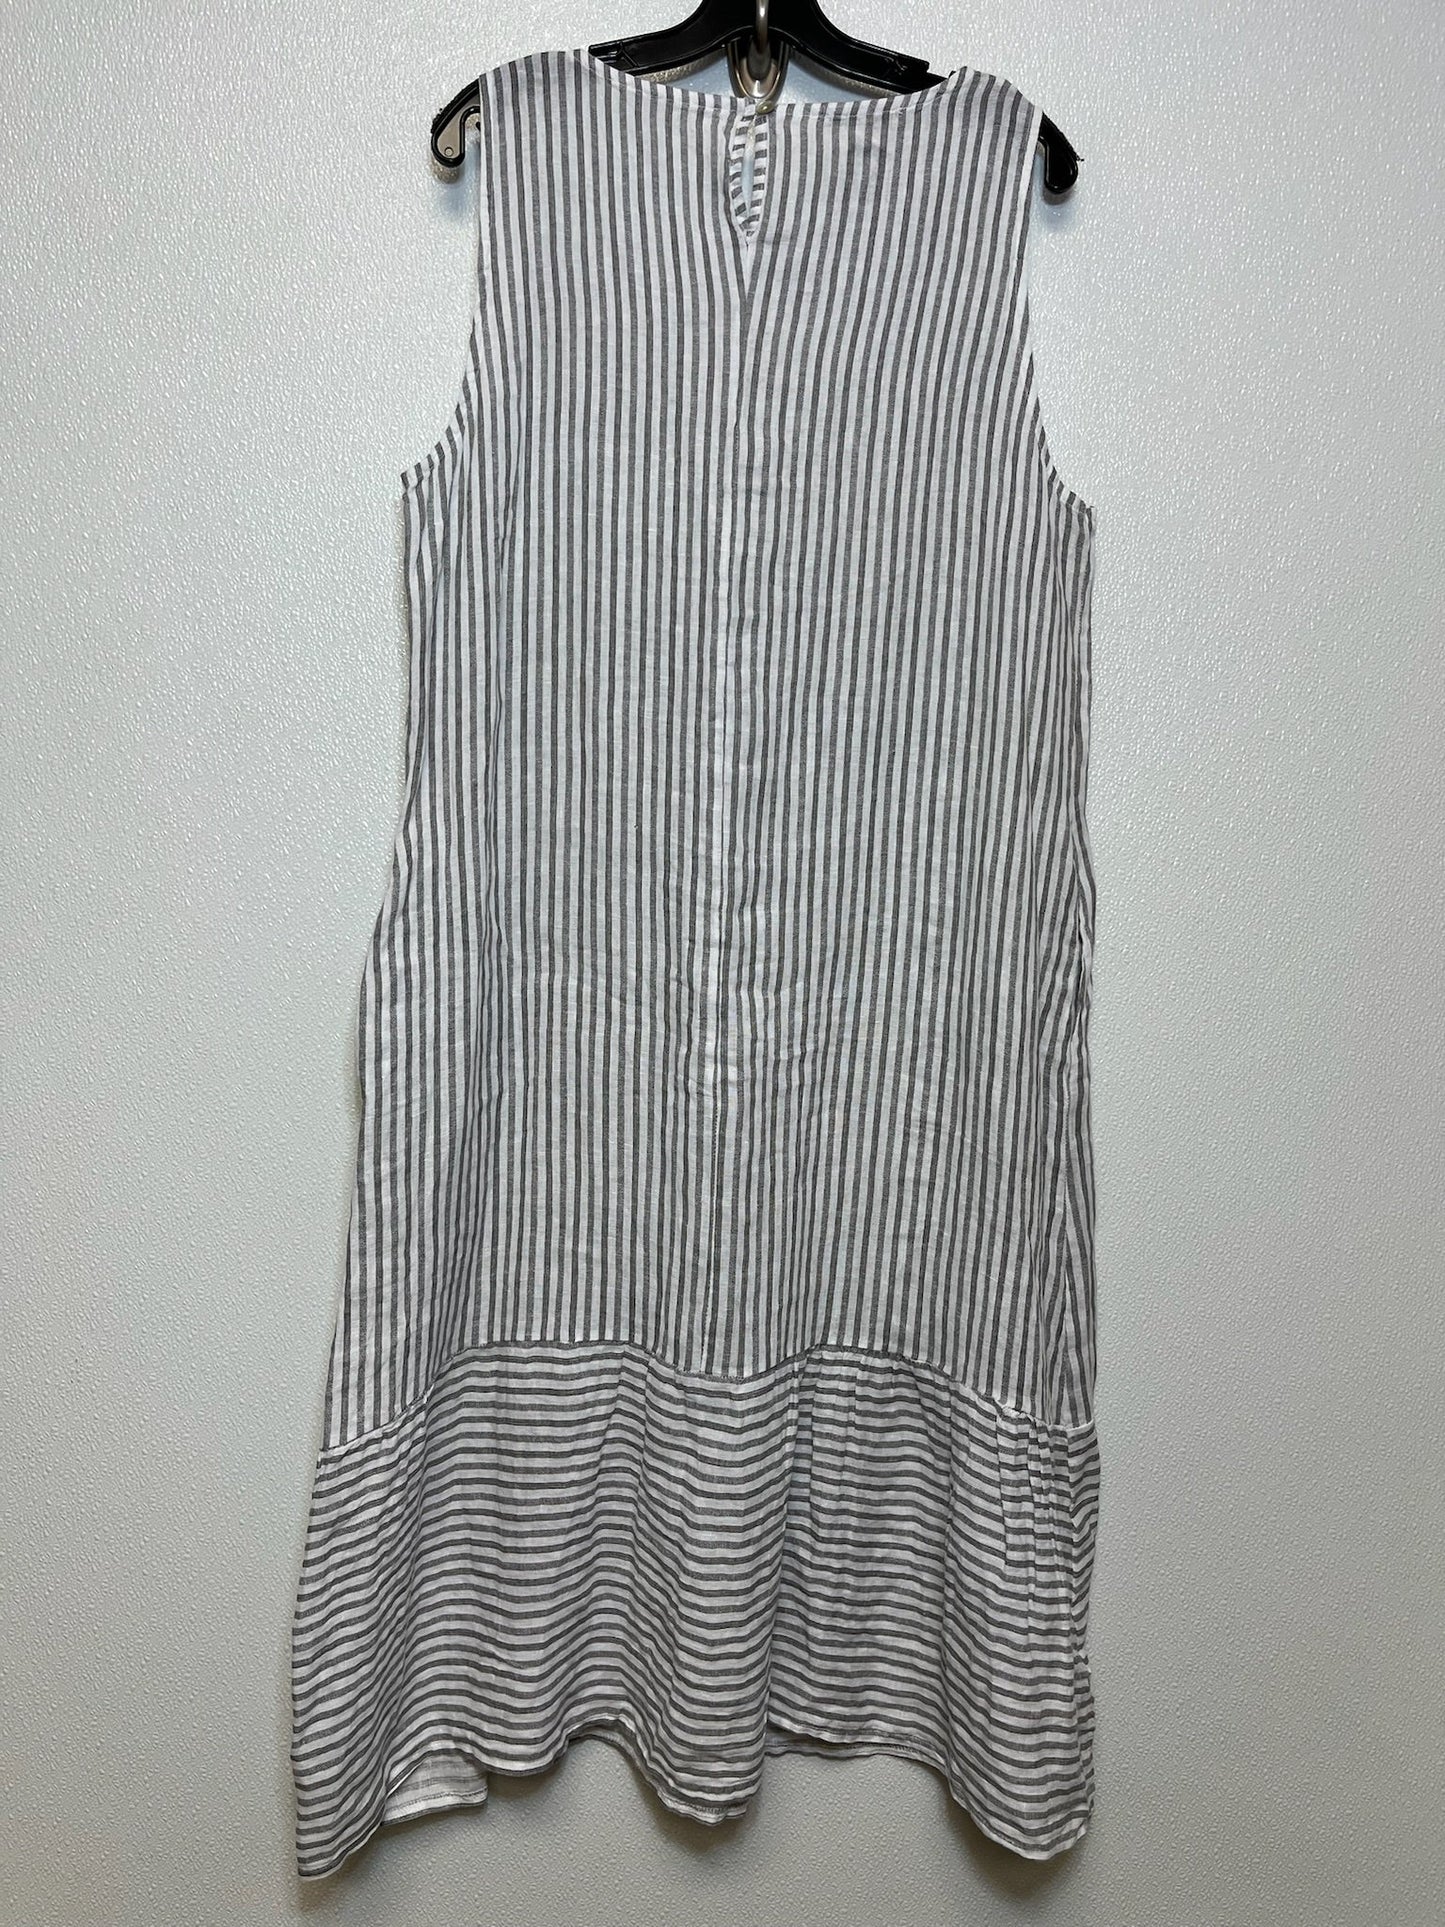 Striped Dress Casual Maxi Clothes Mentor, Size Xl